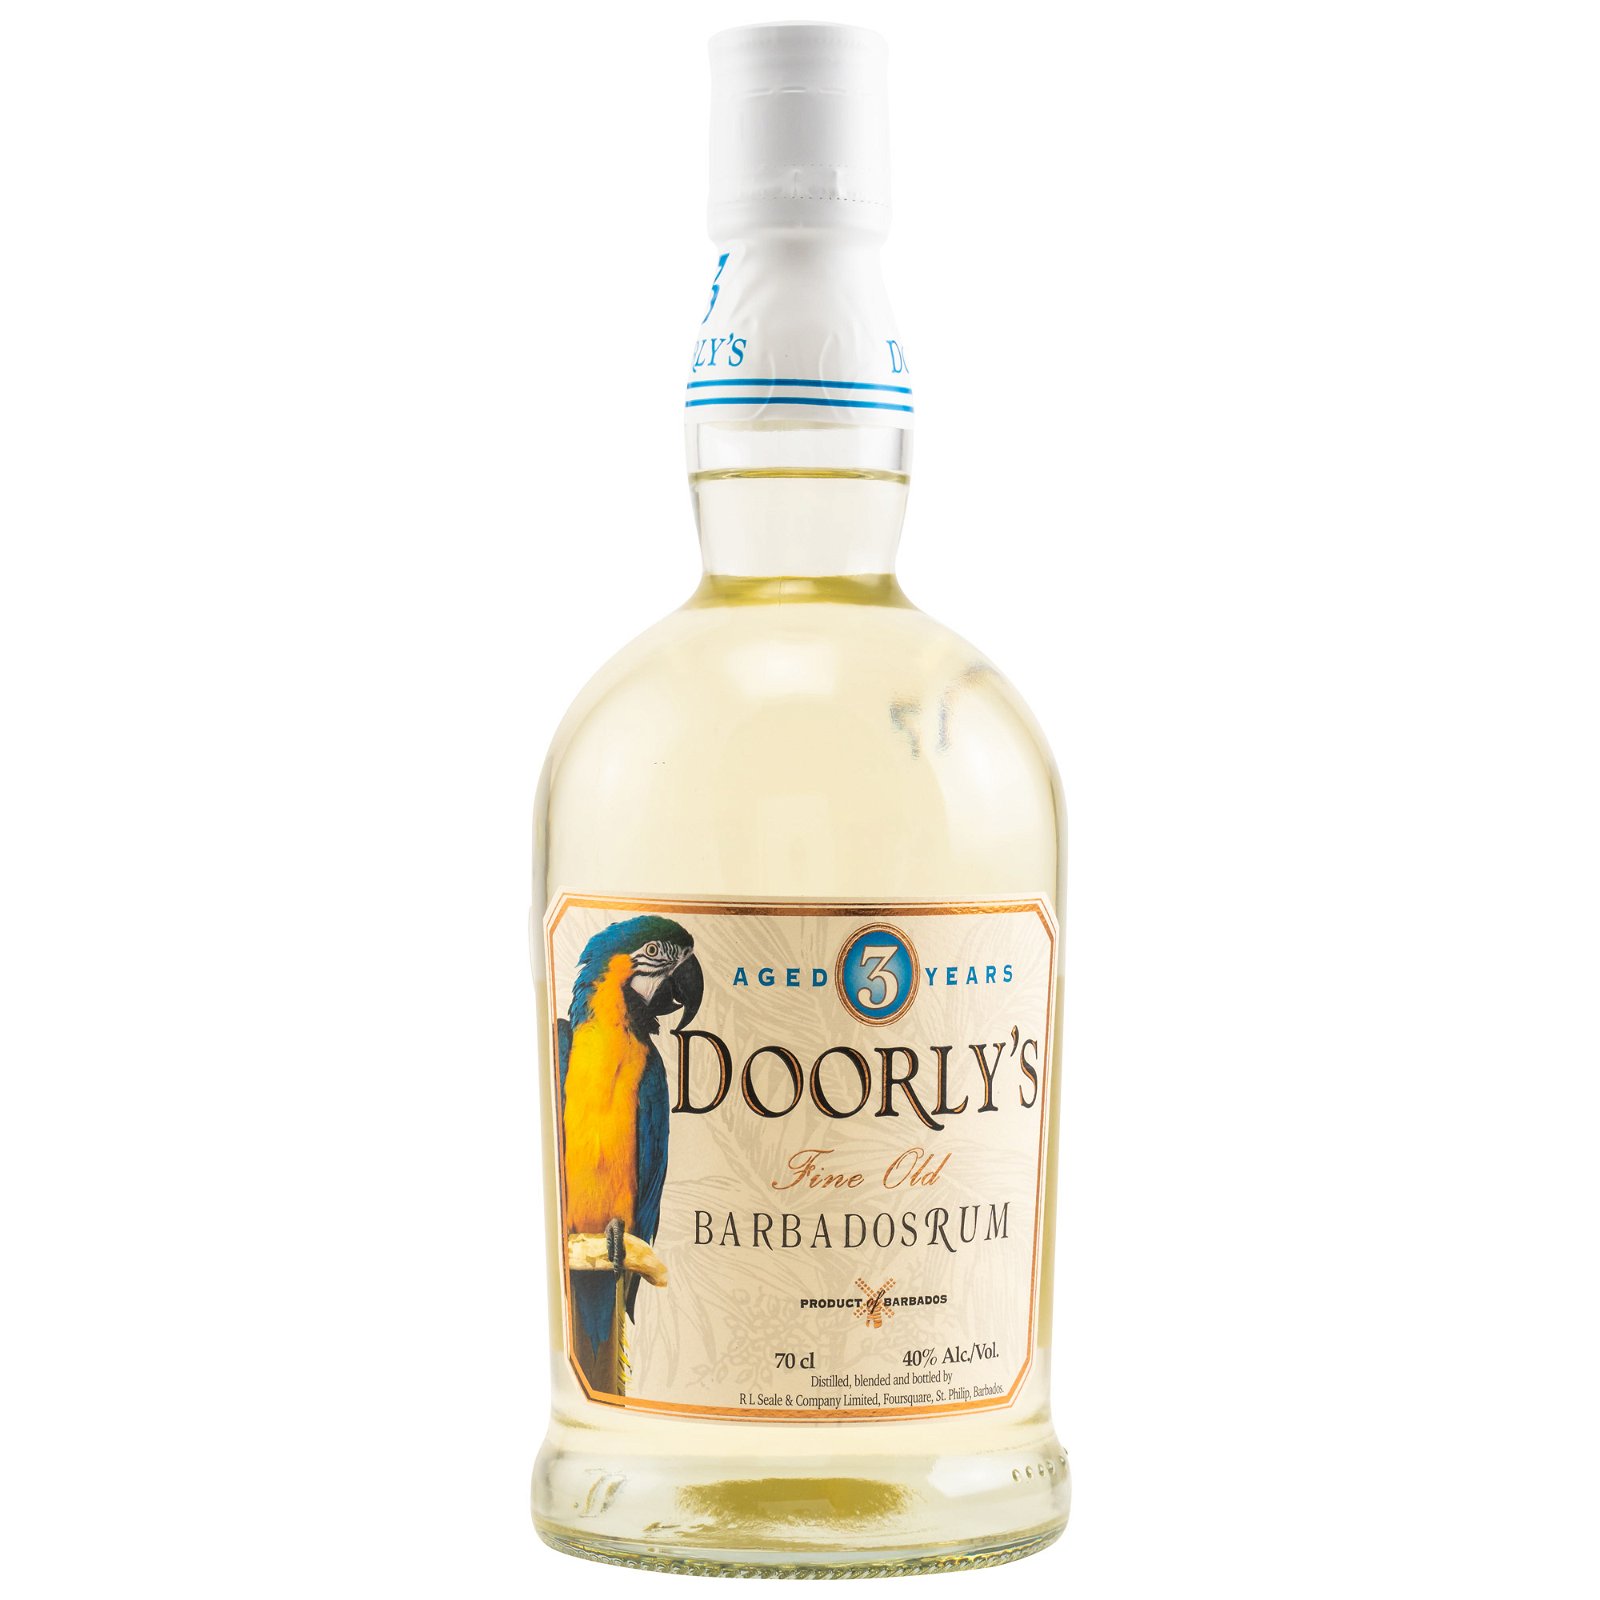 Doorly's 3 Jahre Barbados Rum Fine Old